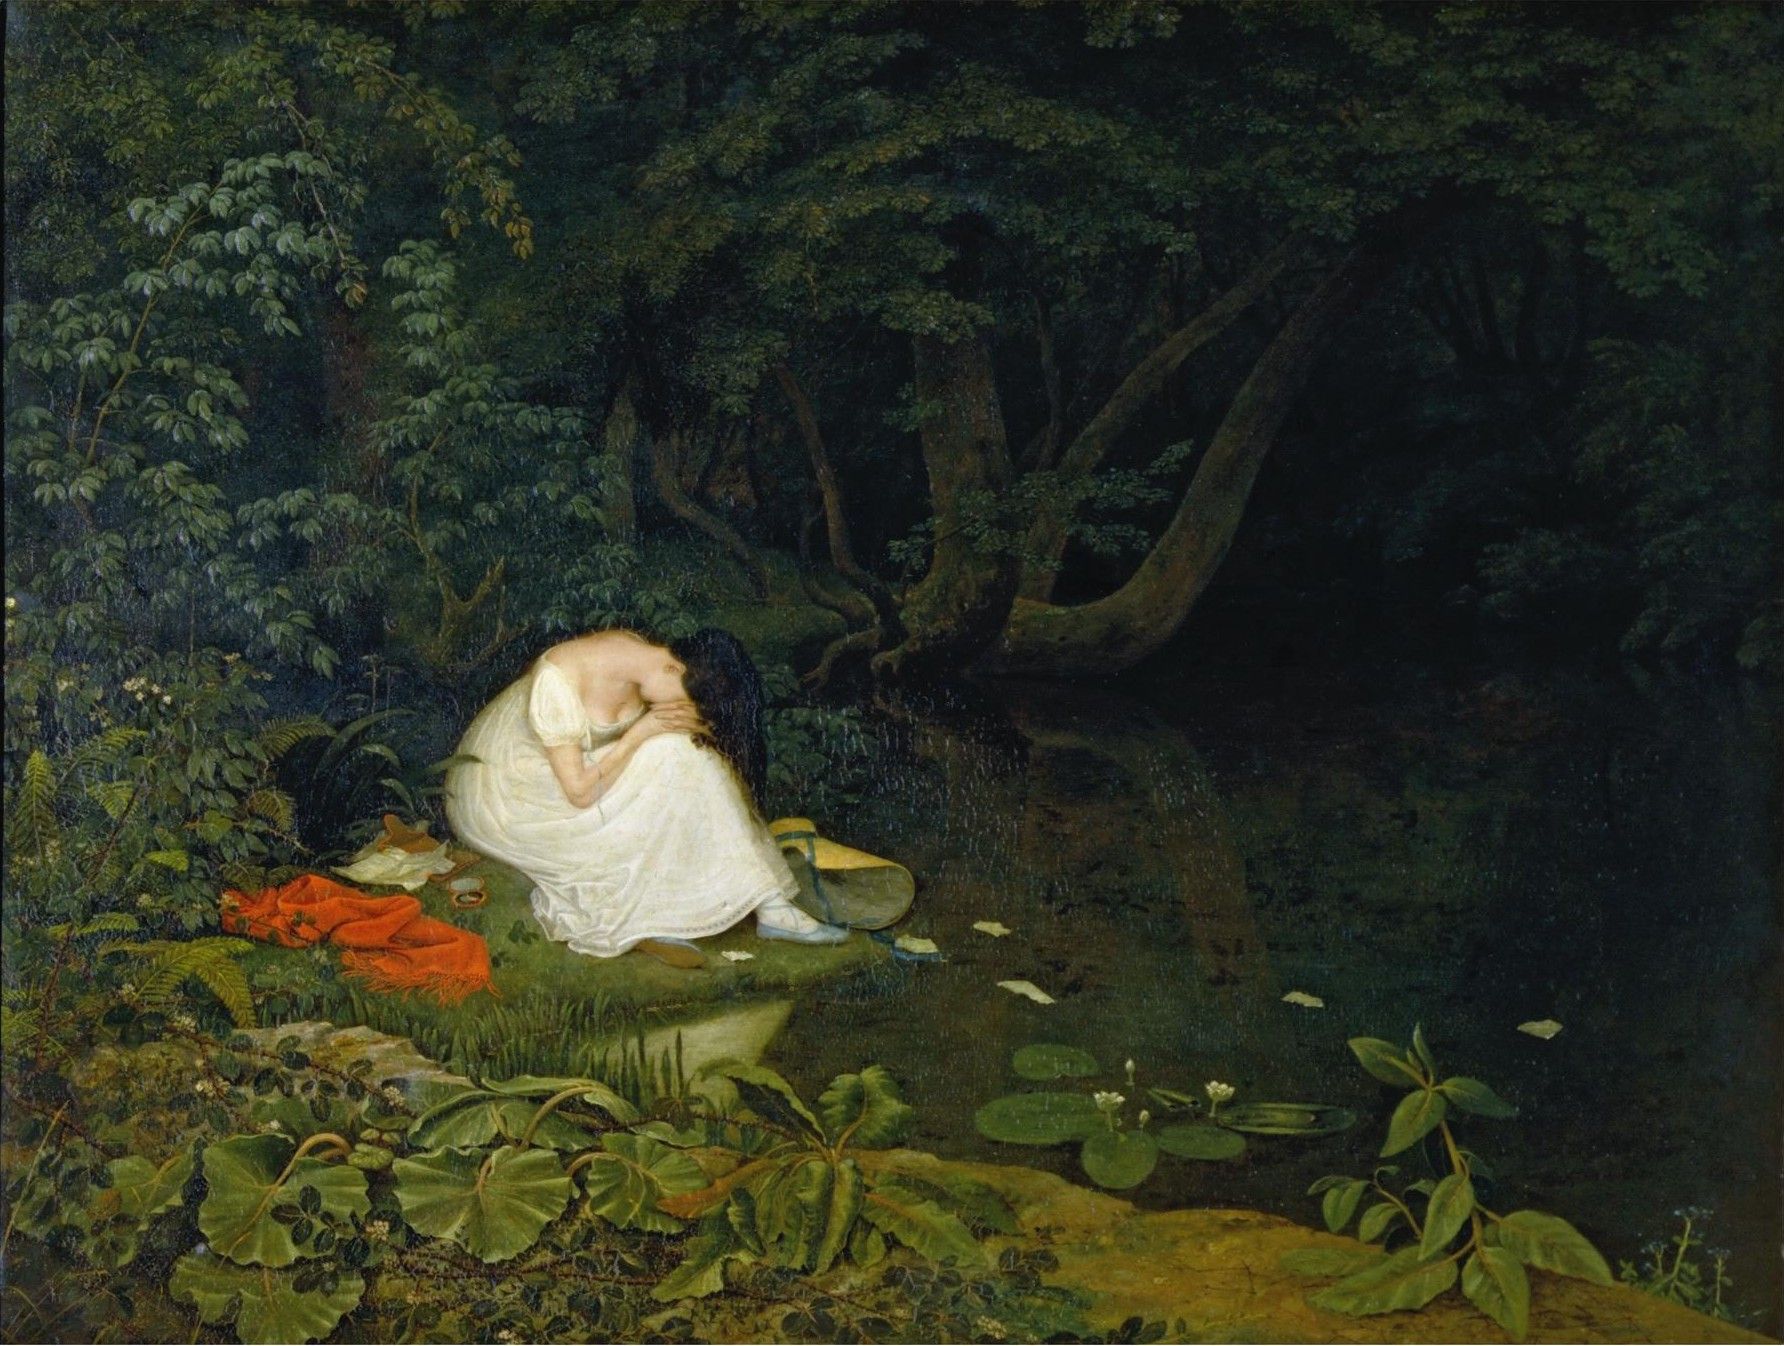 無望的愛 by Francis Danby - 1821 - 62.8 x 81.2 cm 